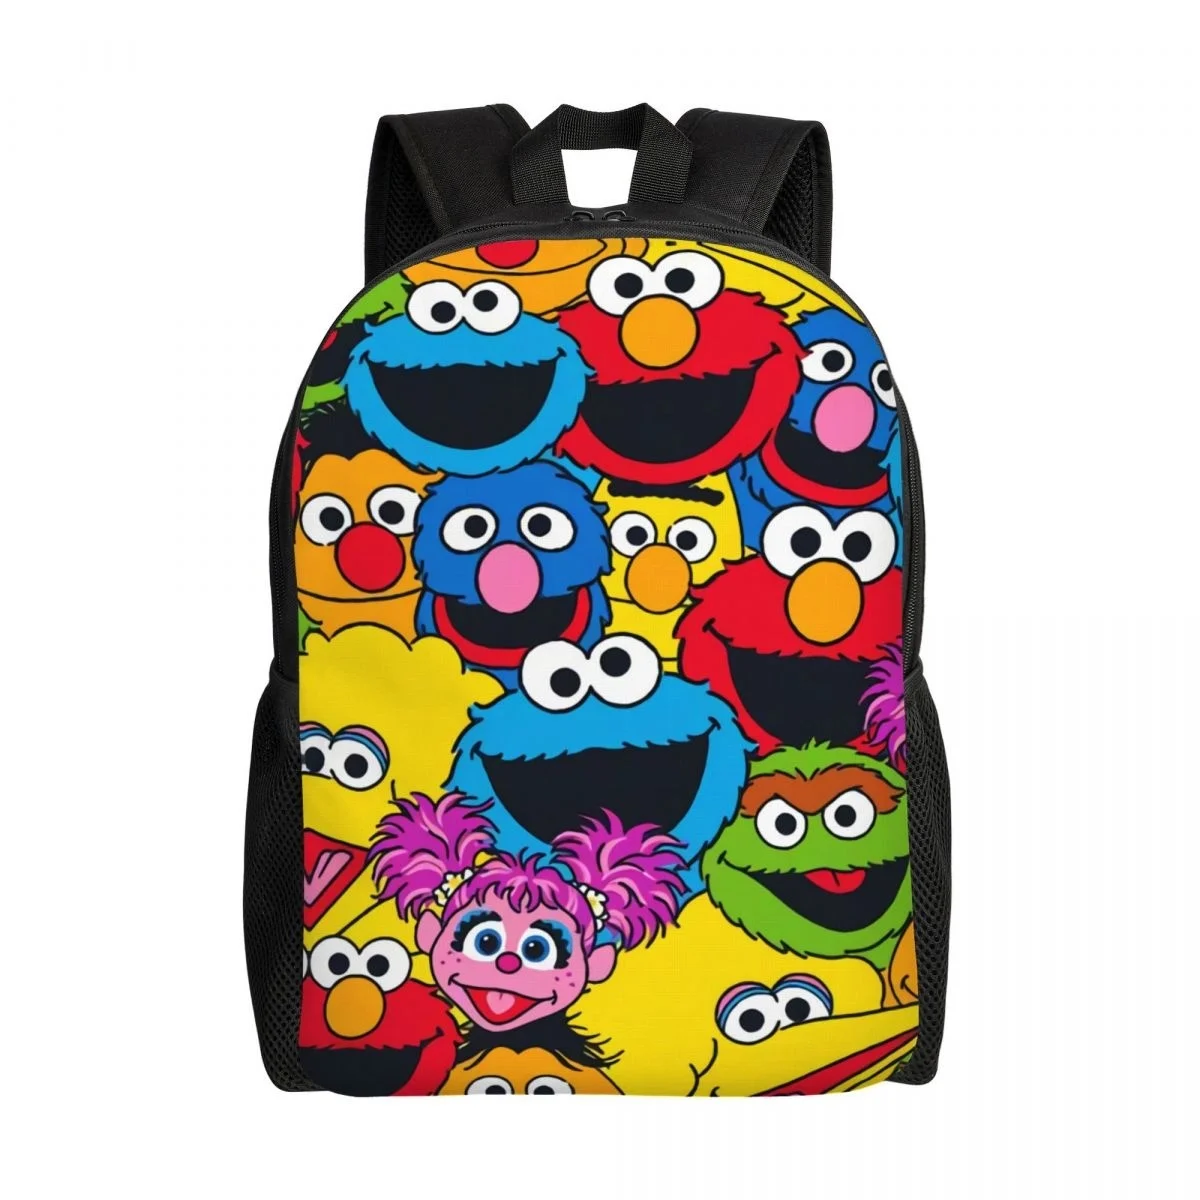 

Sesame Street Cookie Monster Backpack for Women Men College School Students Bookbag Fits 15 Inch Laptop Happy Elmo Bags